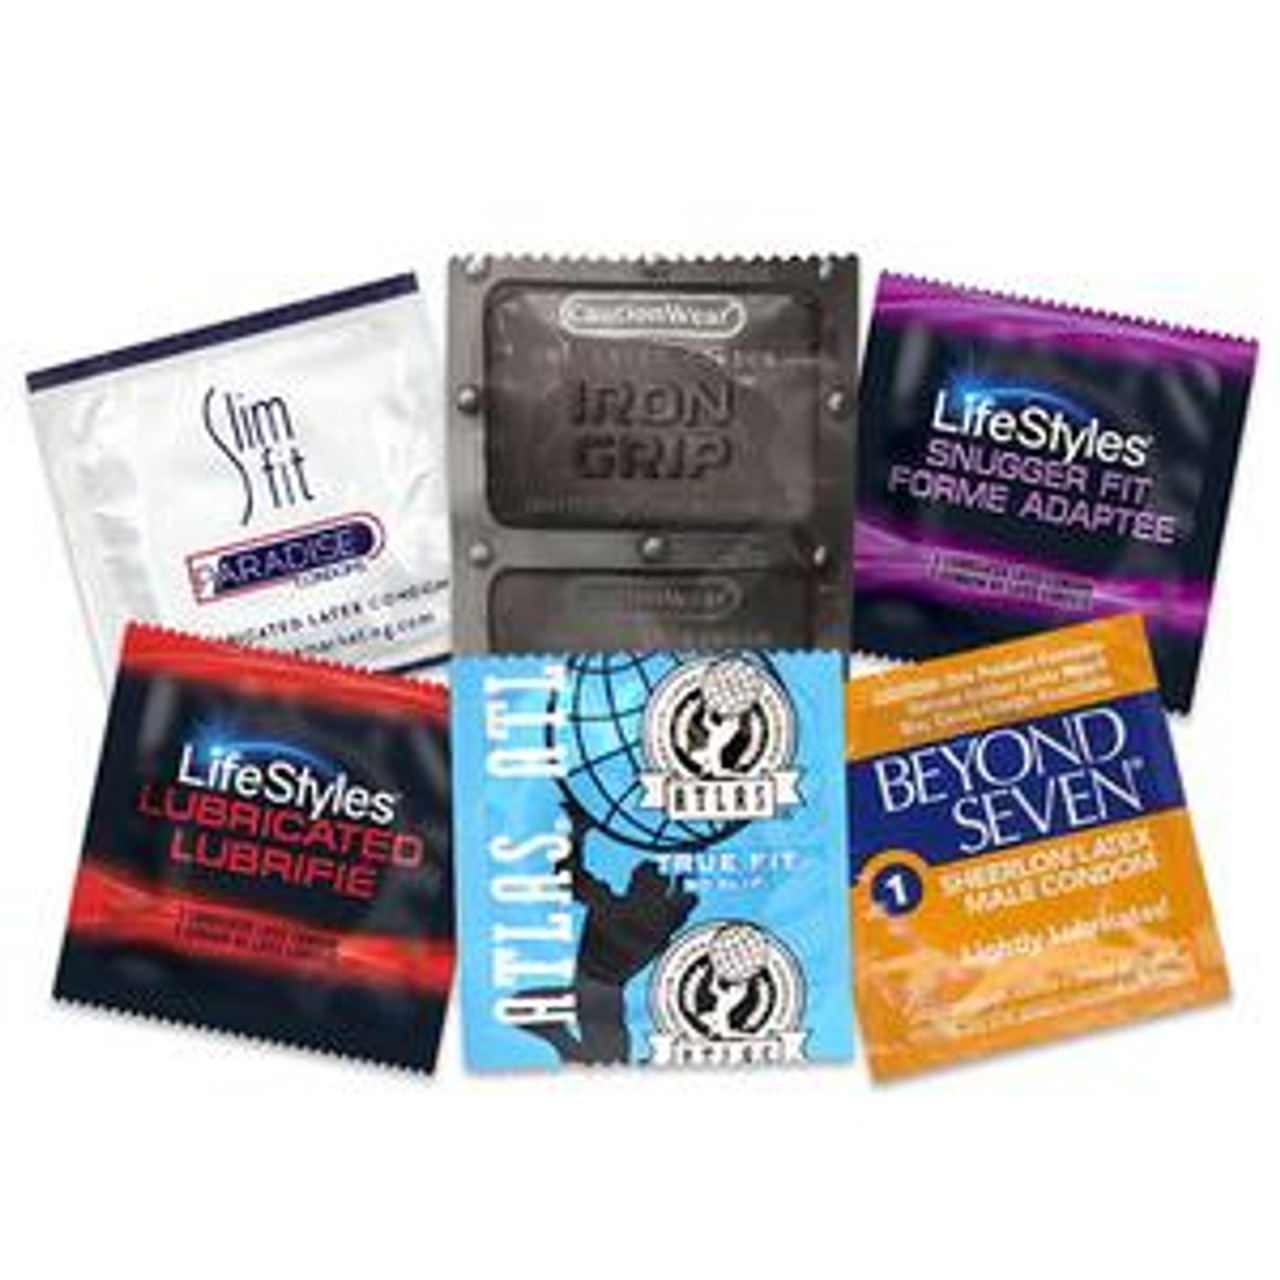 Snugger Fit Condom Sampler | Buy Snugger Fit Condoms online from CondomDepot.com